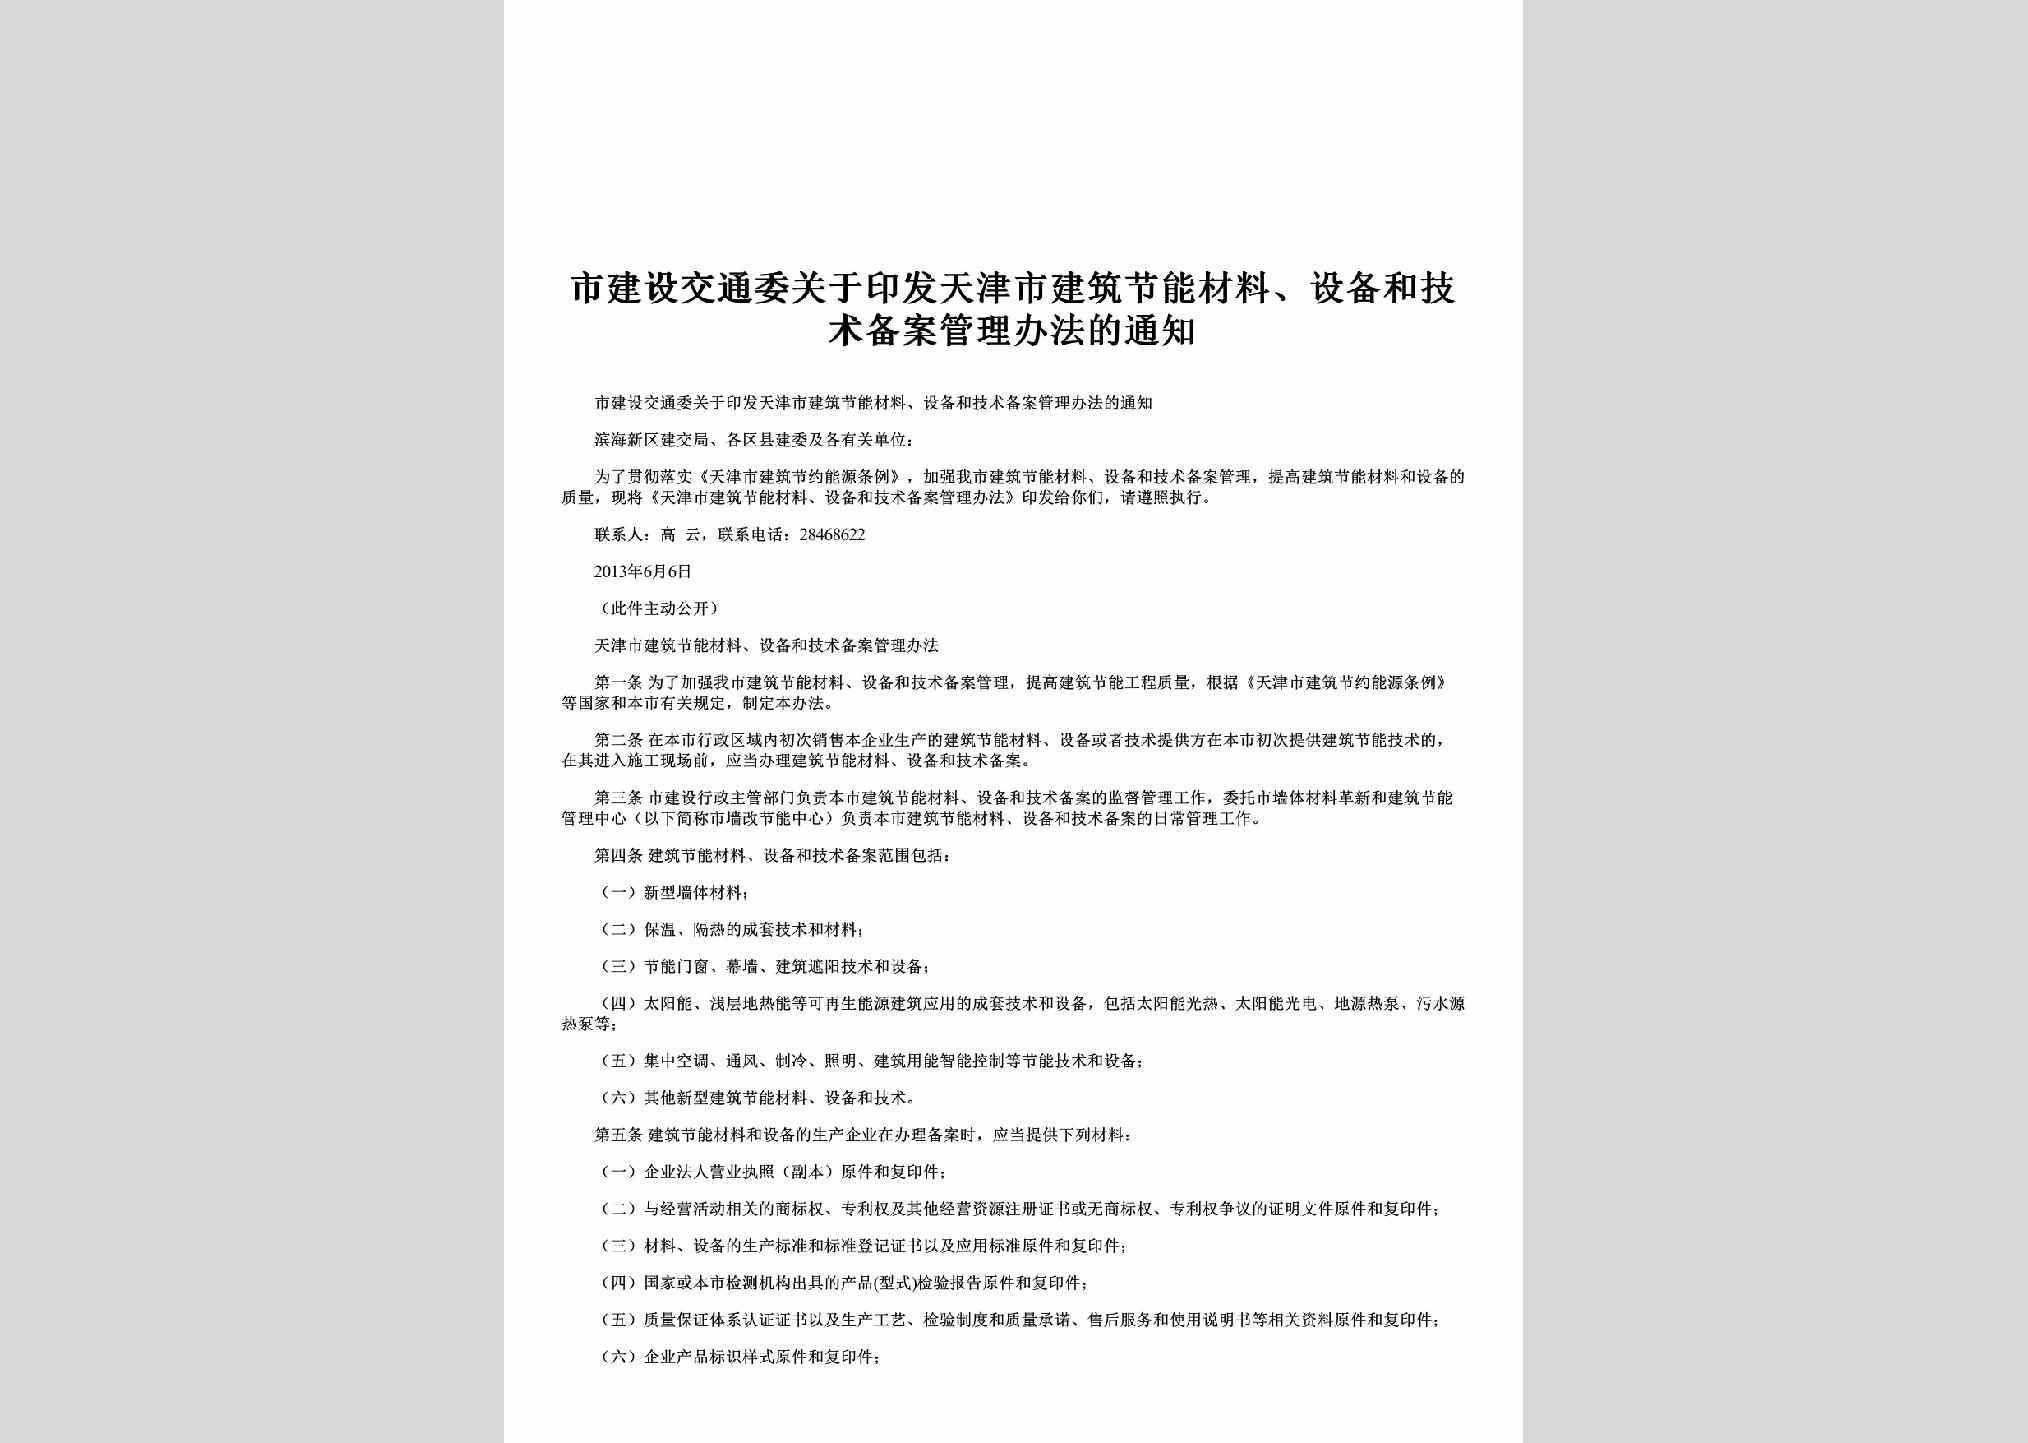 TJ-GYYFTJSJ-2013：关于印发天津市建筑节能材料、设备和技术备案管理办法的通知